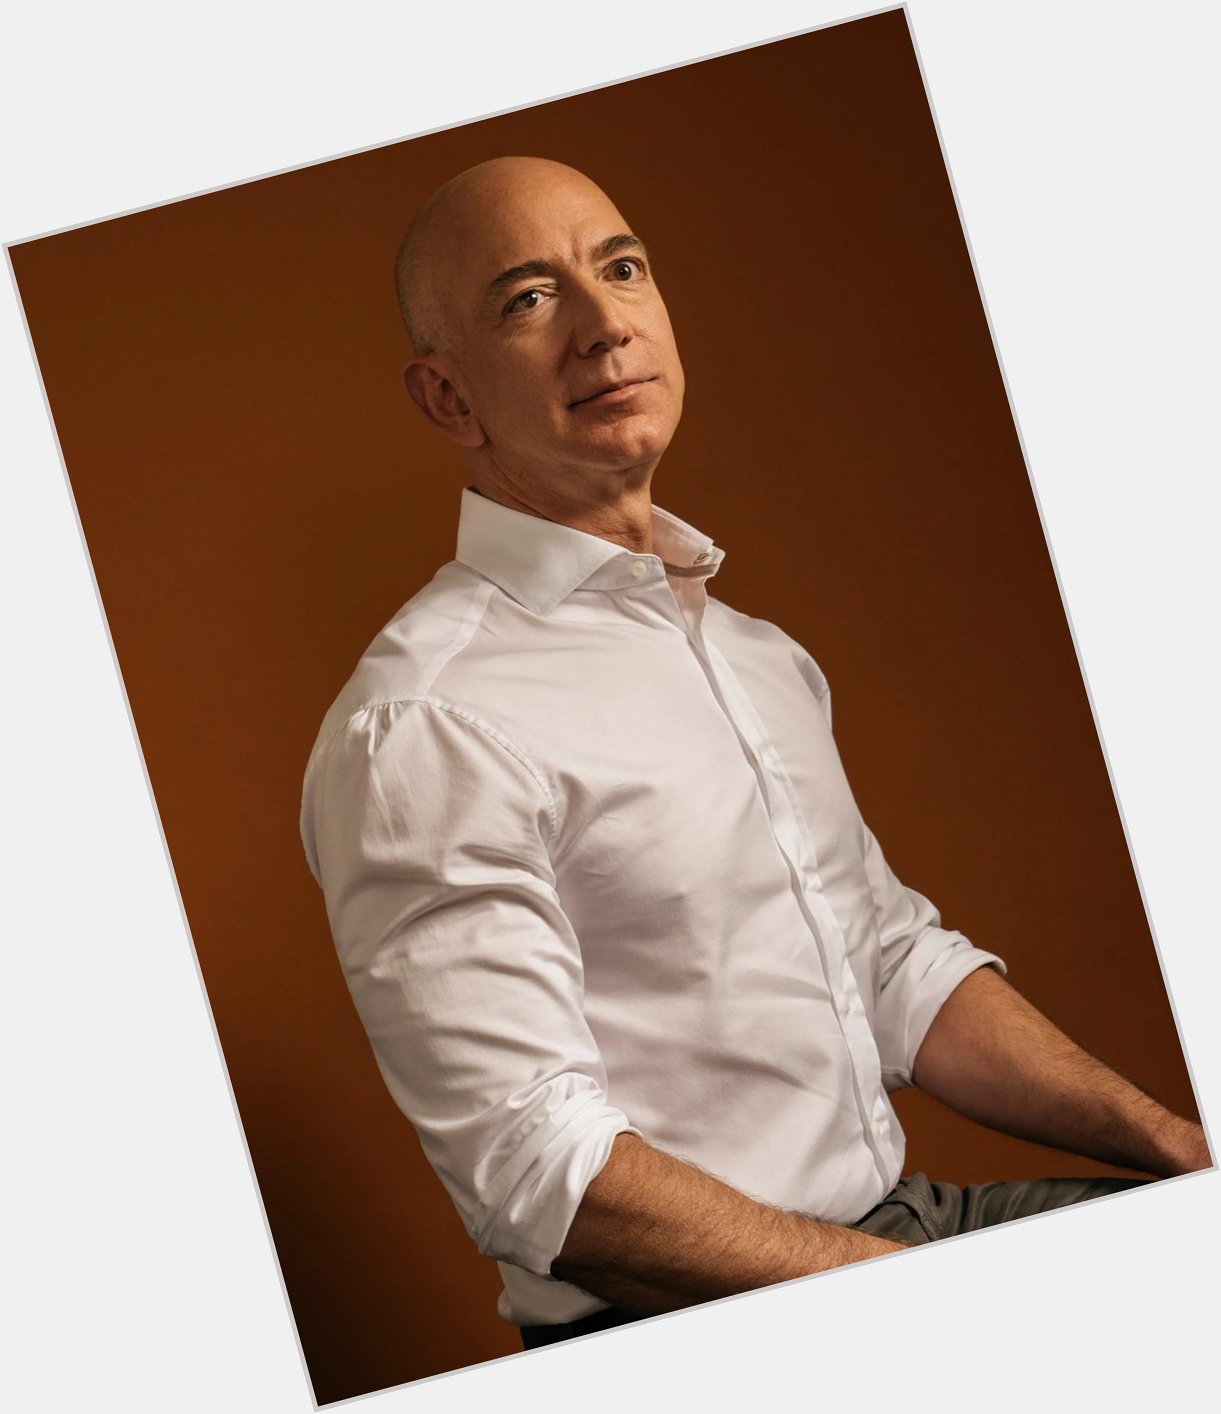 Happy 58th Birthday to Jeff Bezos! 